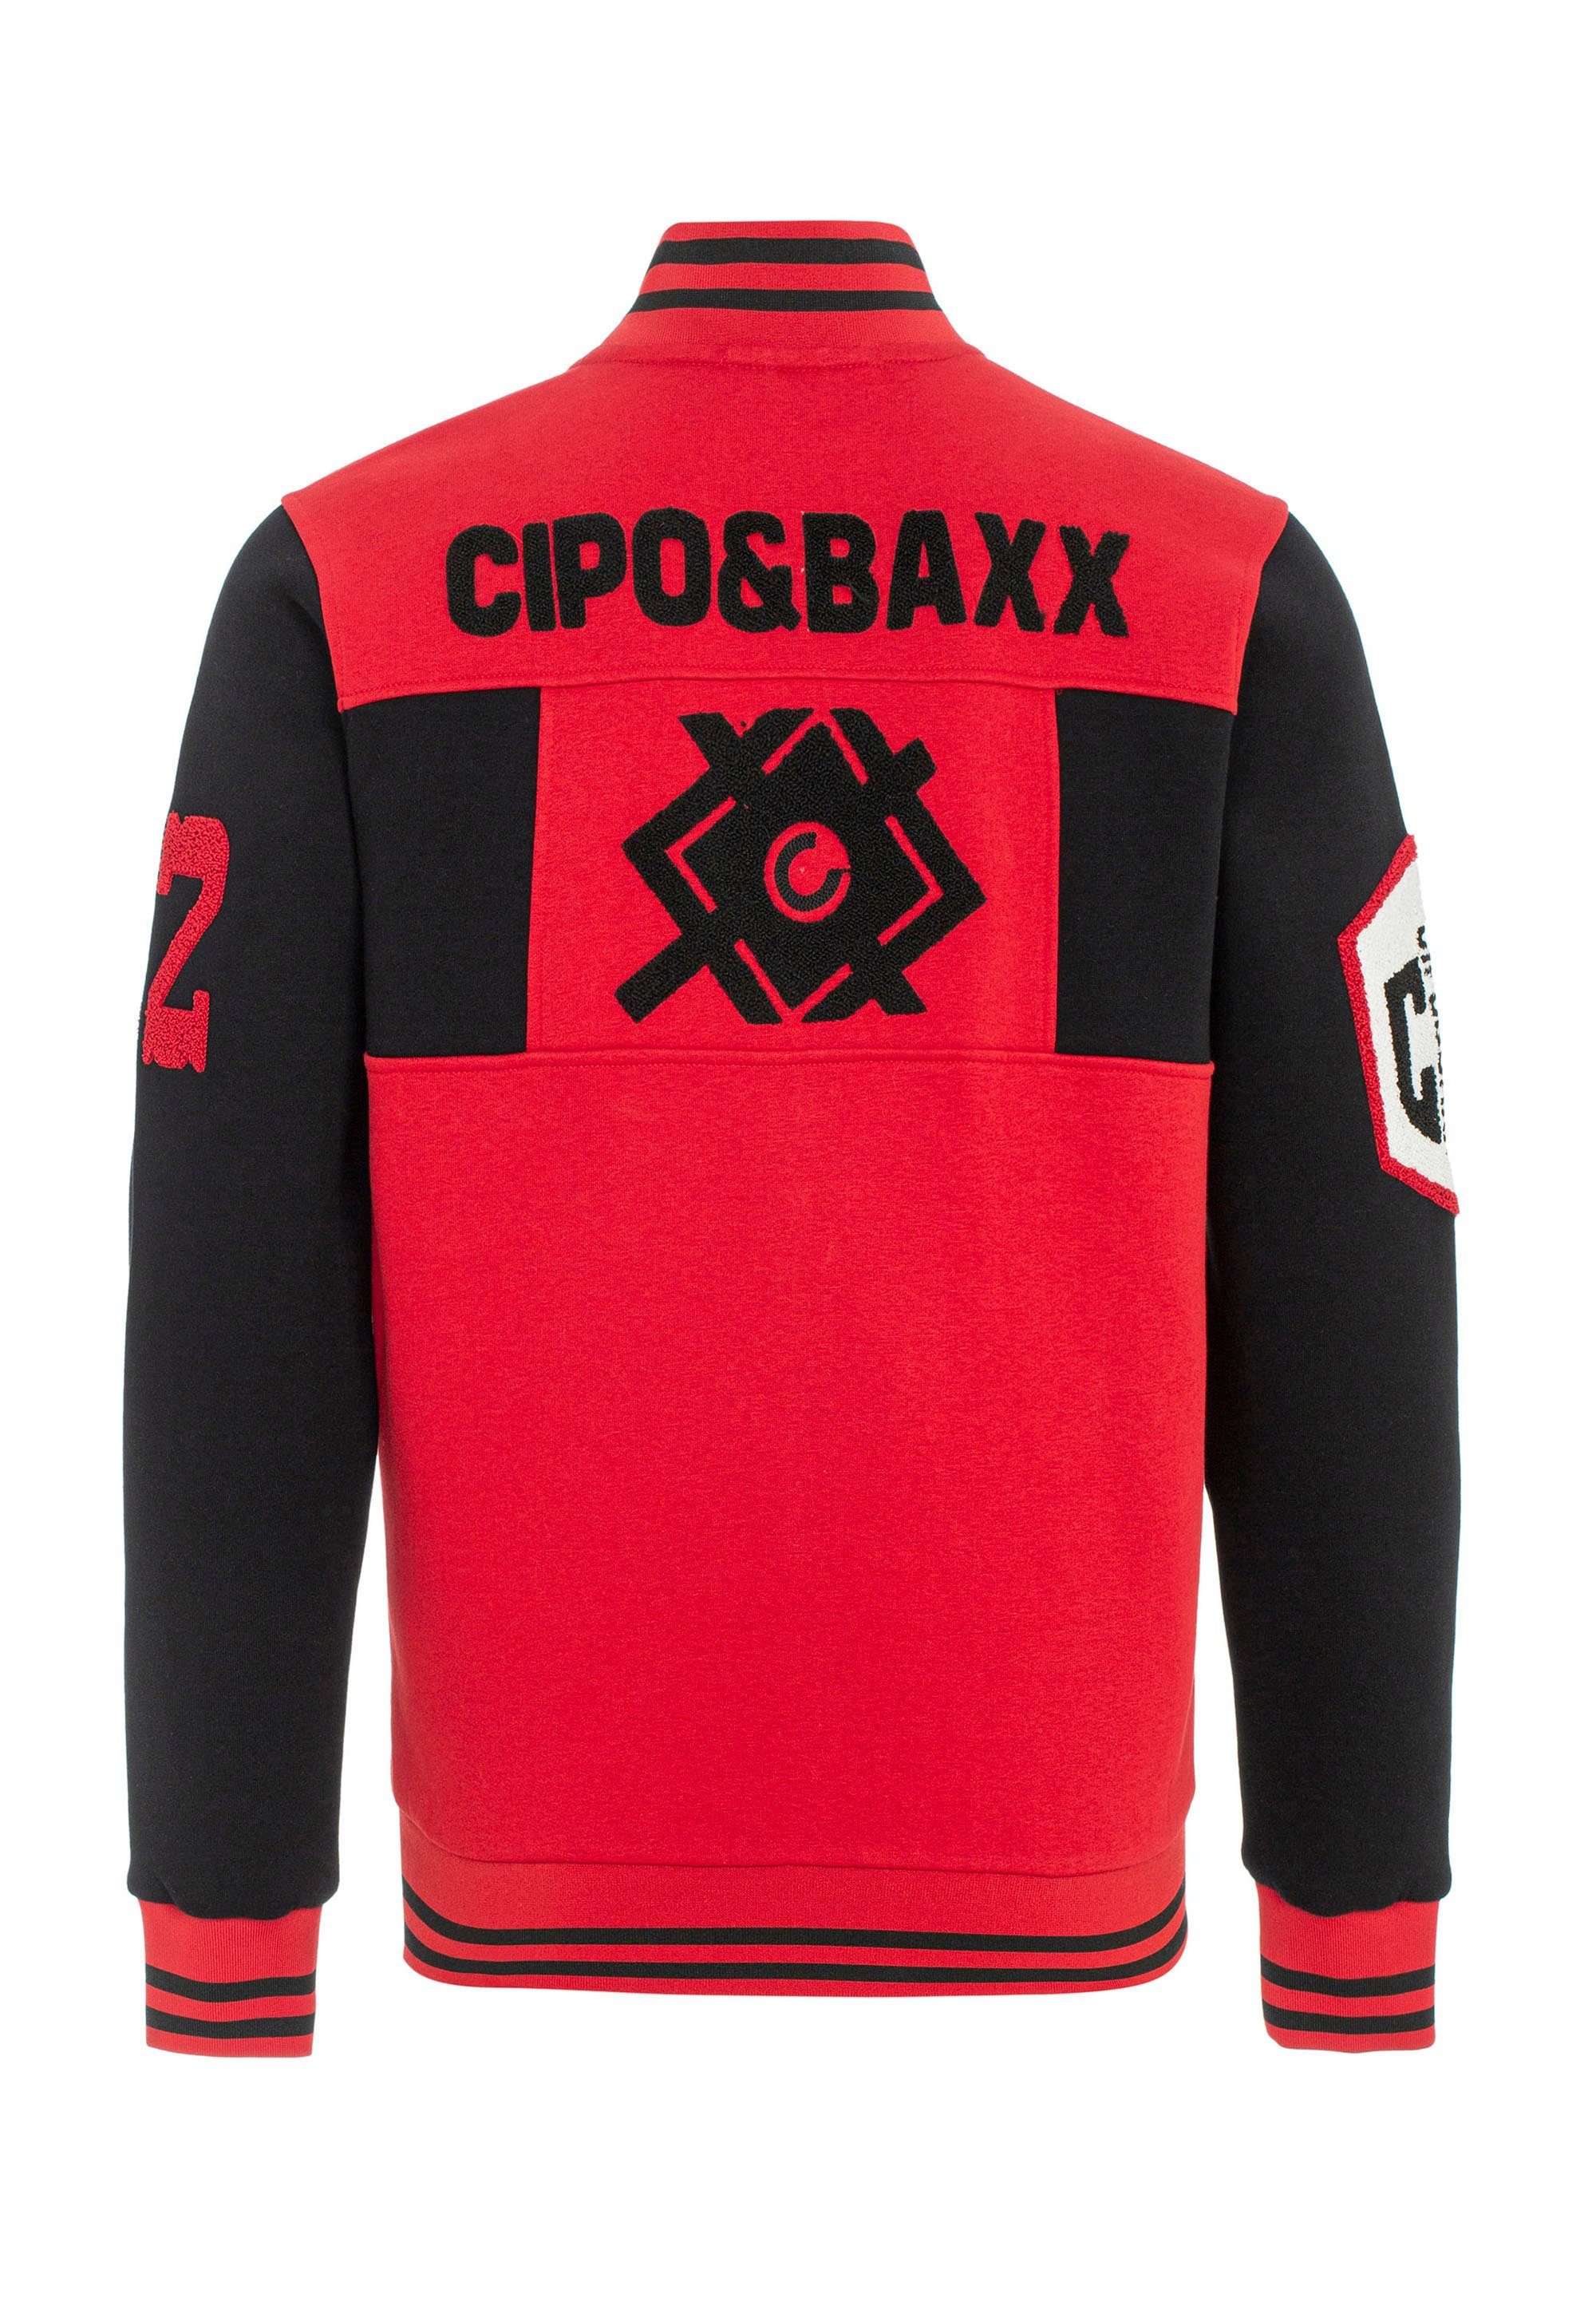 Cipo & Baxx Sweatjacke in Design rot-schwarz sportlichem